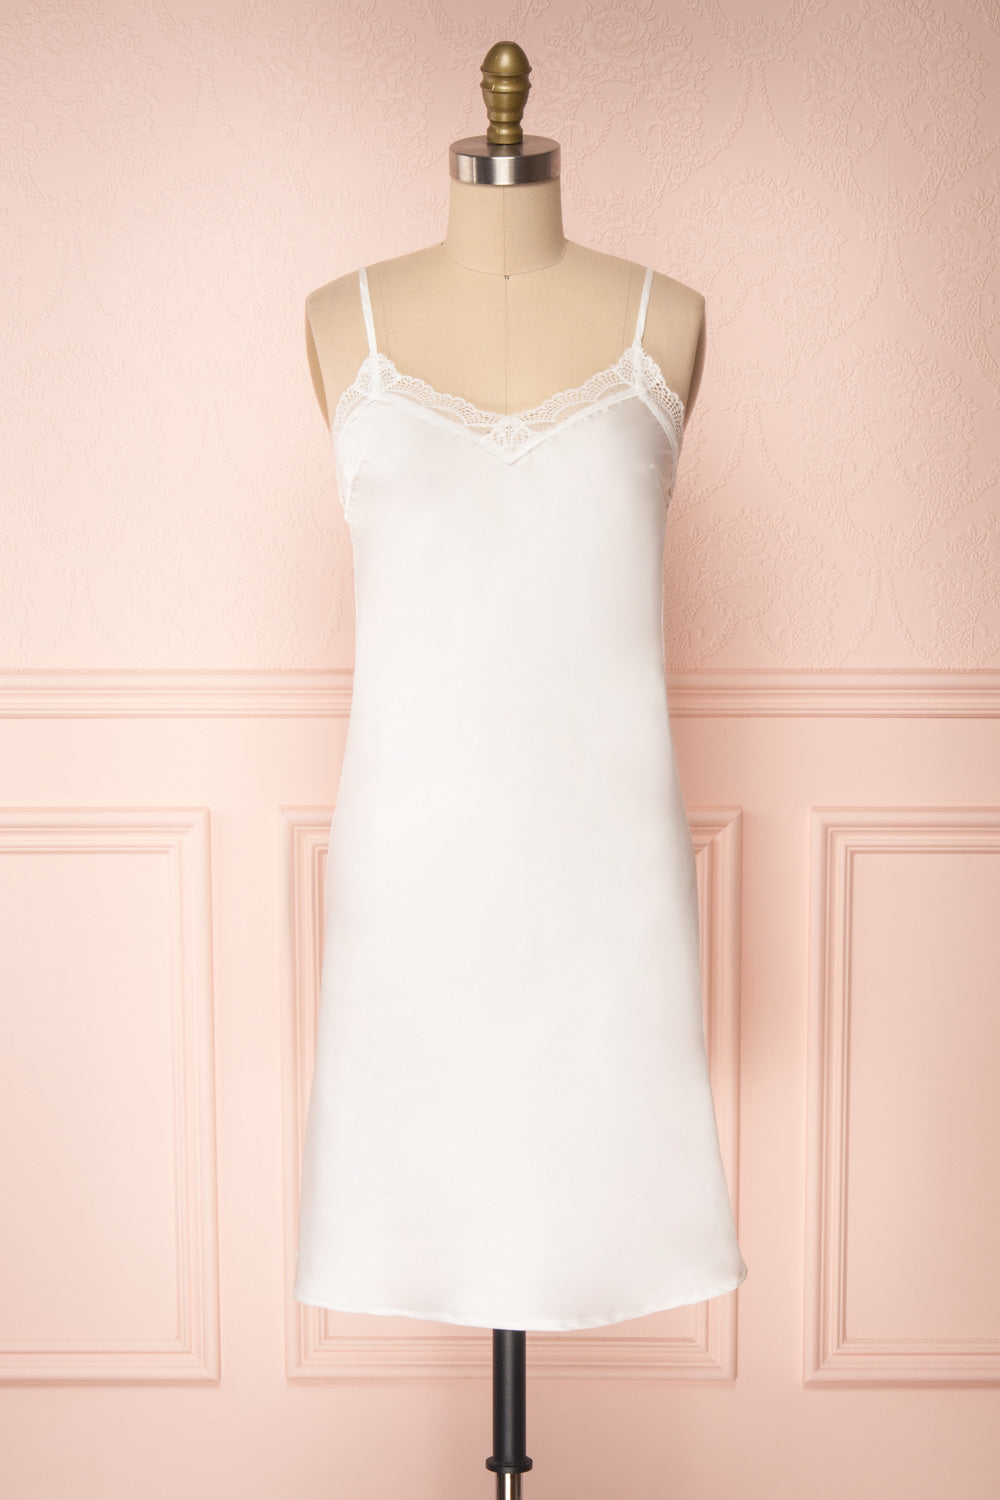 Adella Blanc White Short Satin Dress w/ Lace front view | Boutique 1861